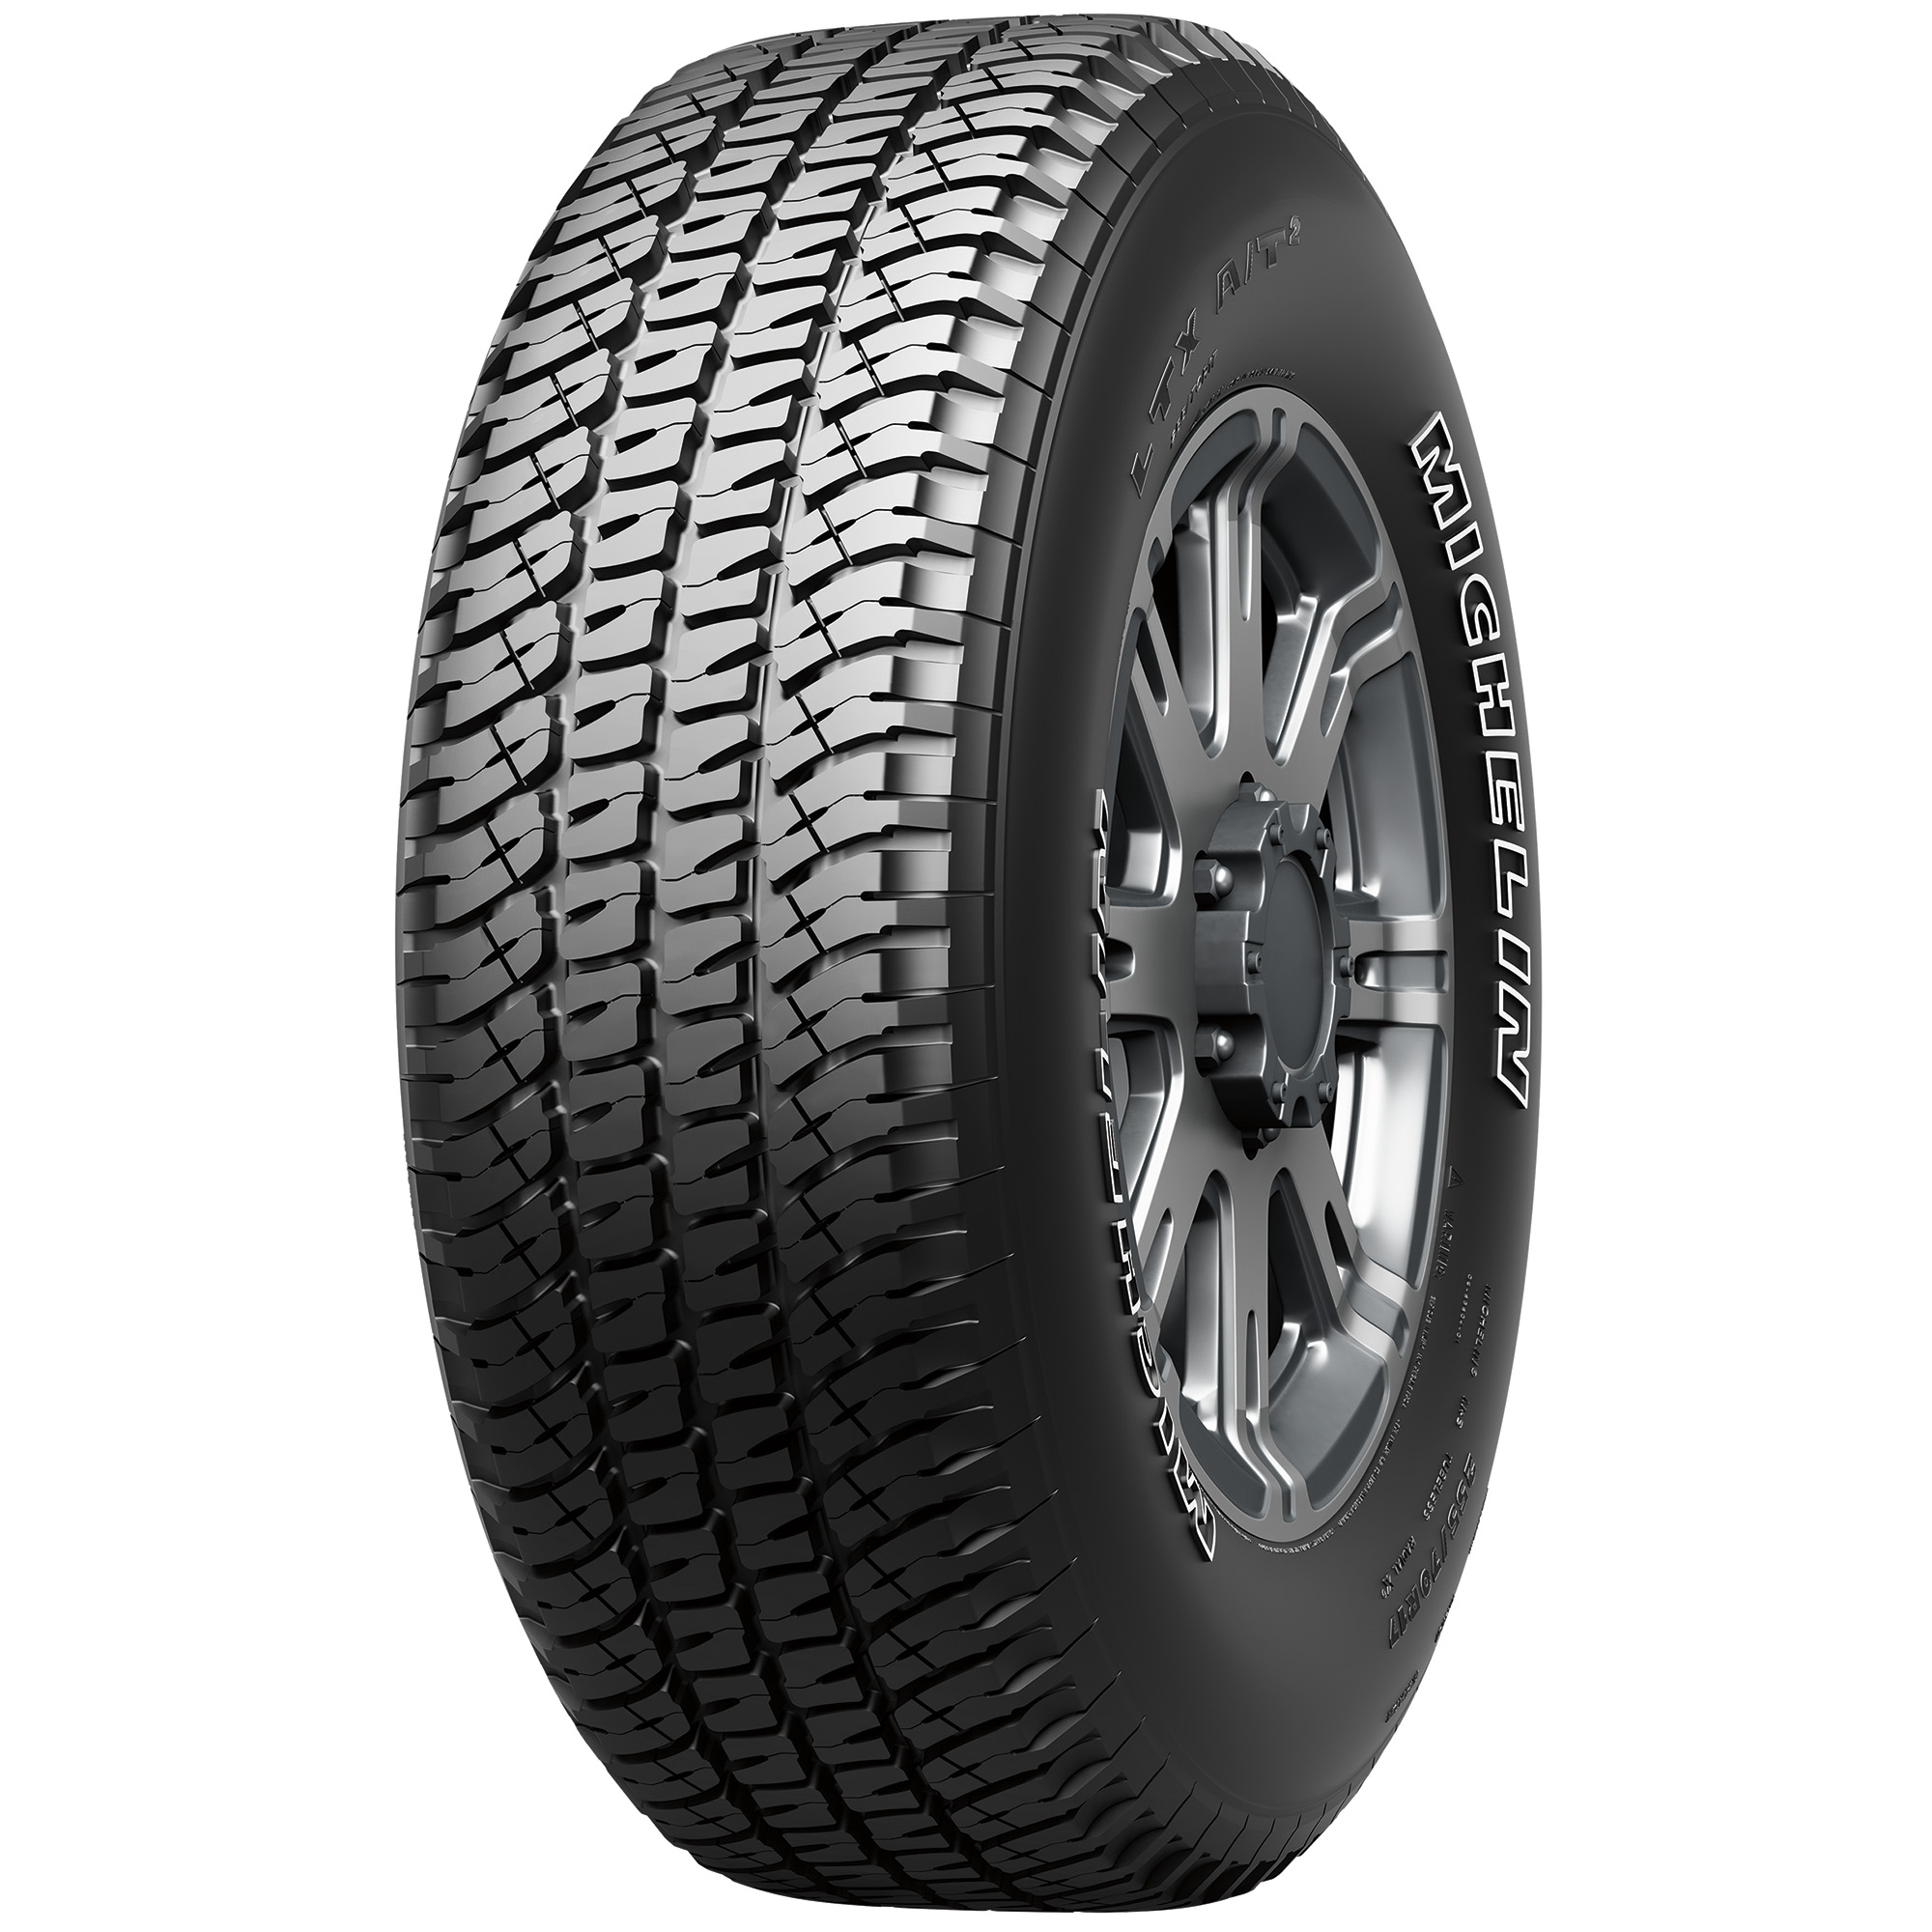 Michelin LTX A T2 All Season LT275 70R18 E 125 122S Tire Walmart 